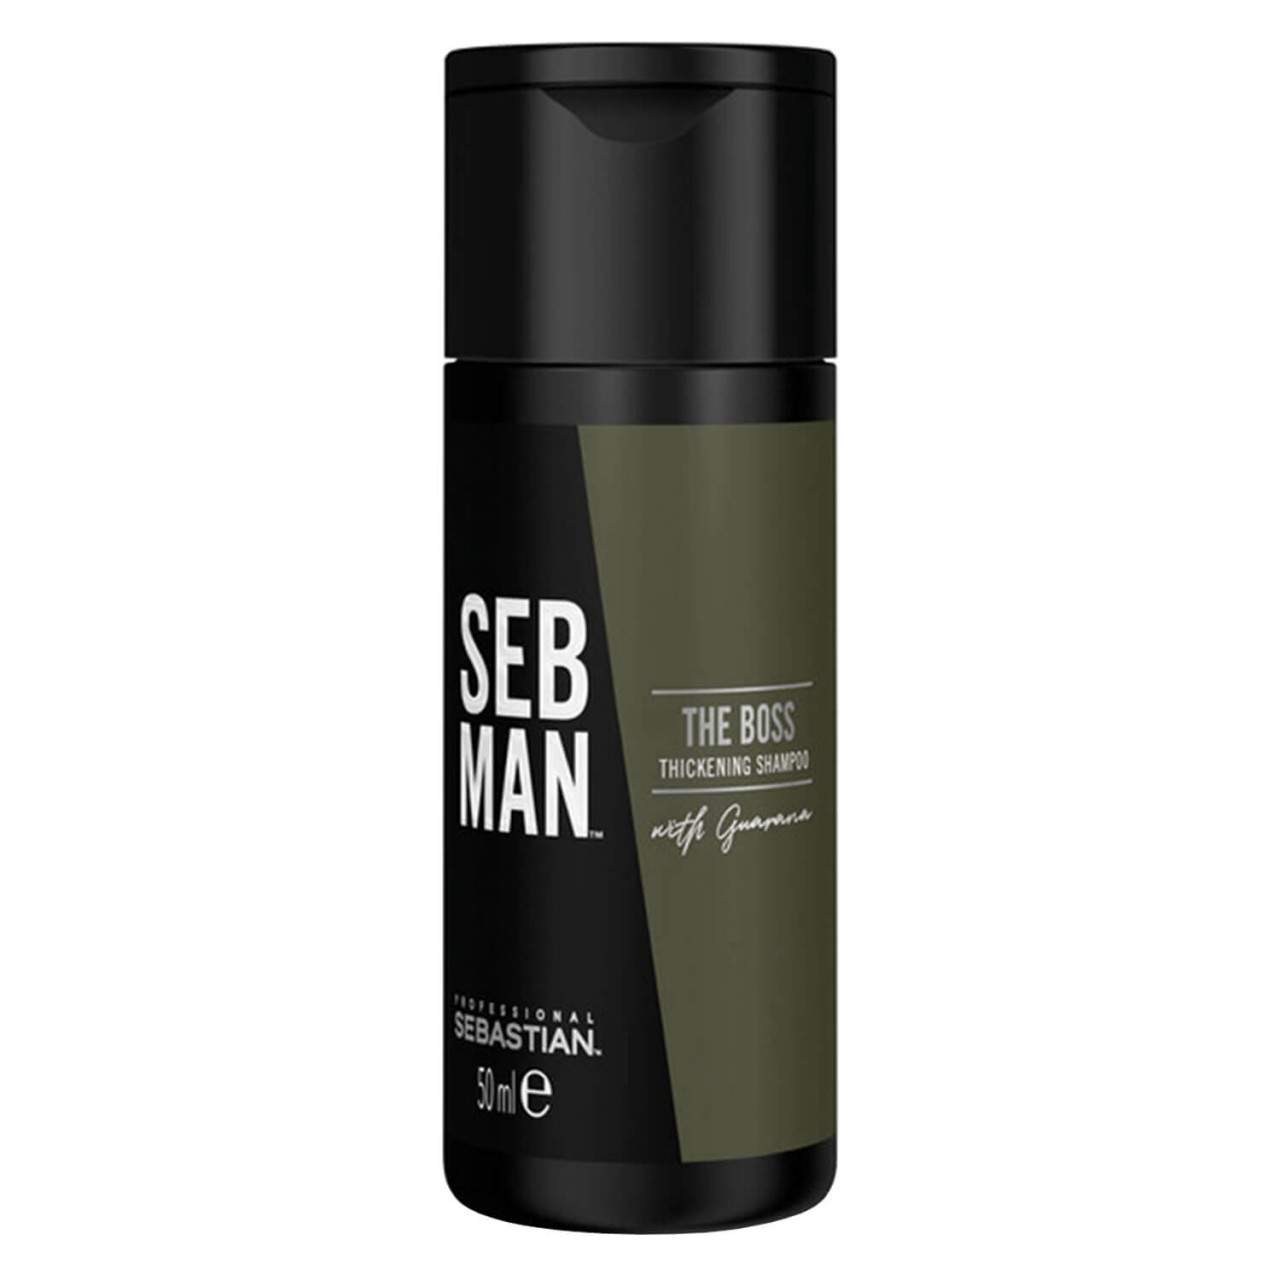 SEB MAN - The Boss Thickening Shampoo von Sebastian